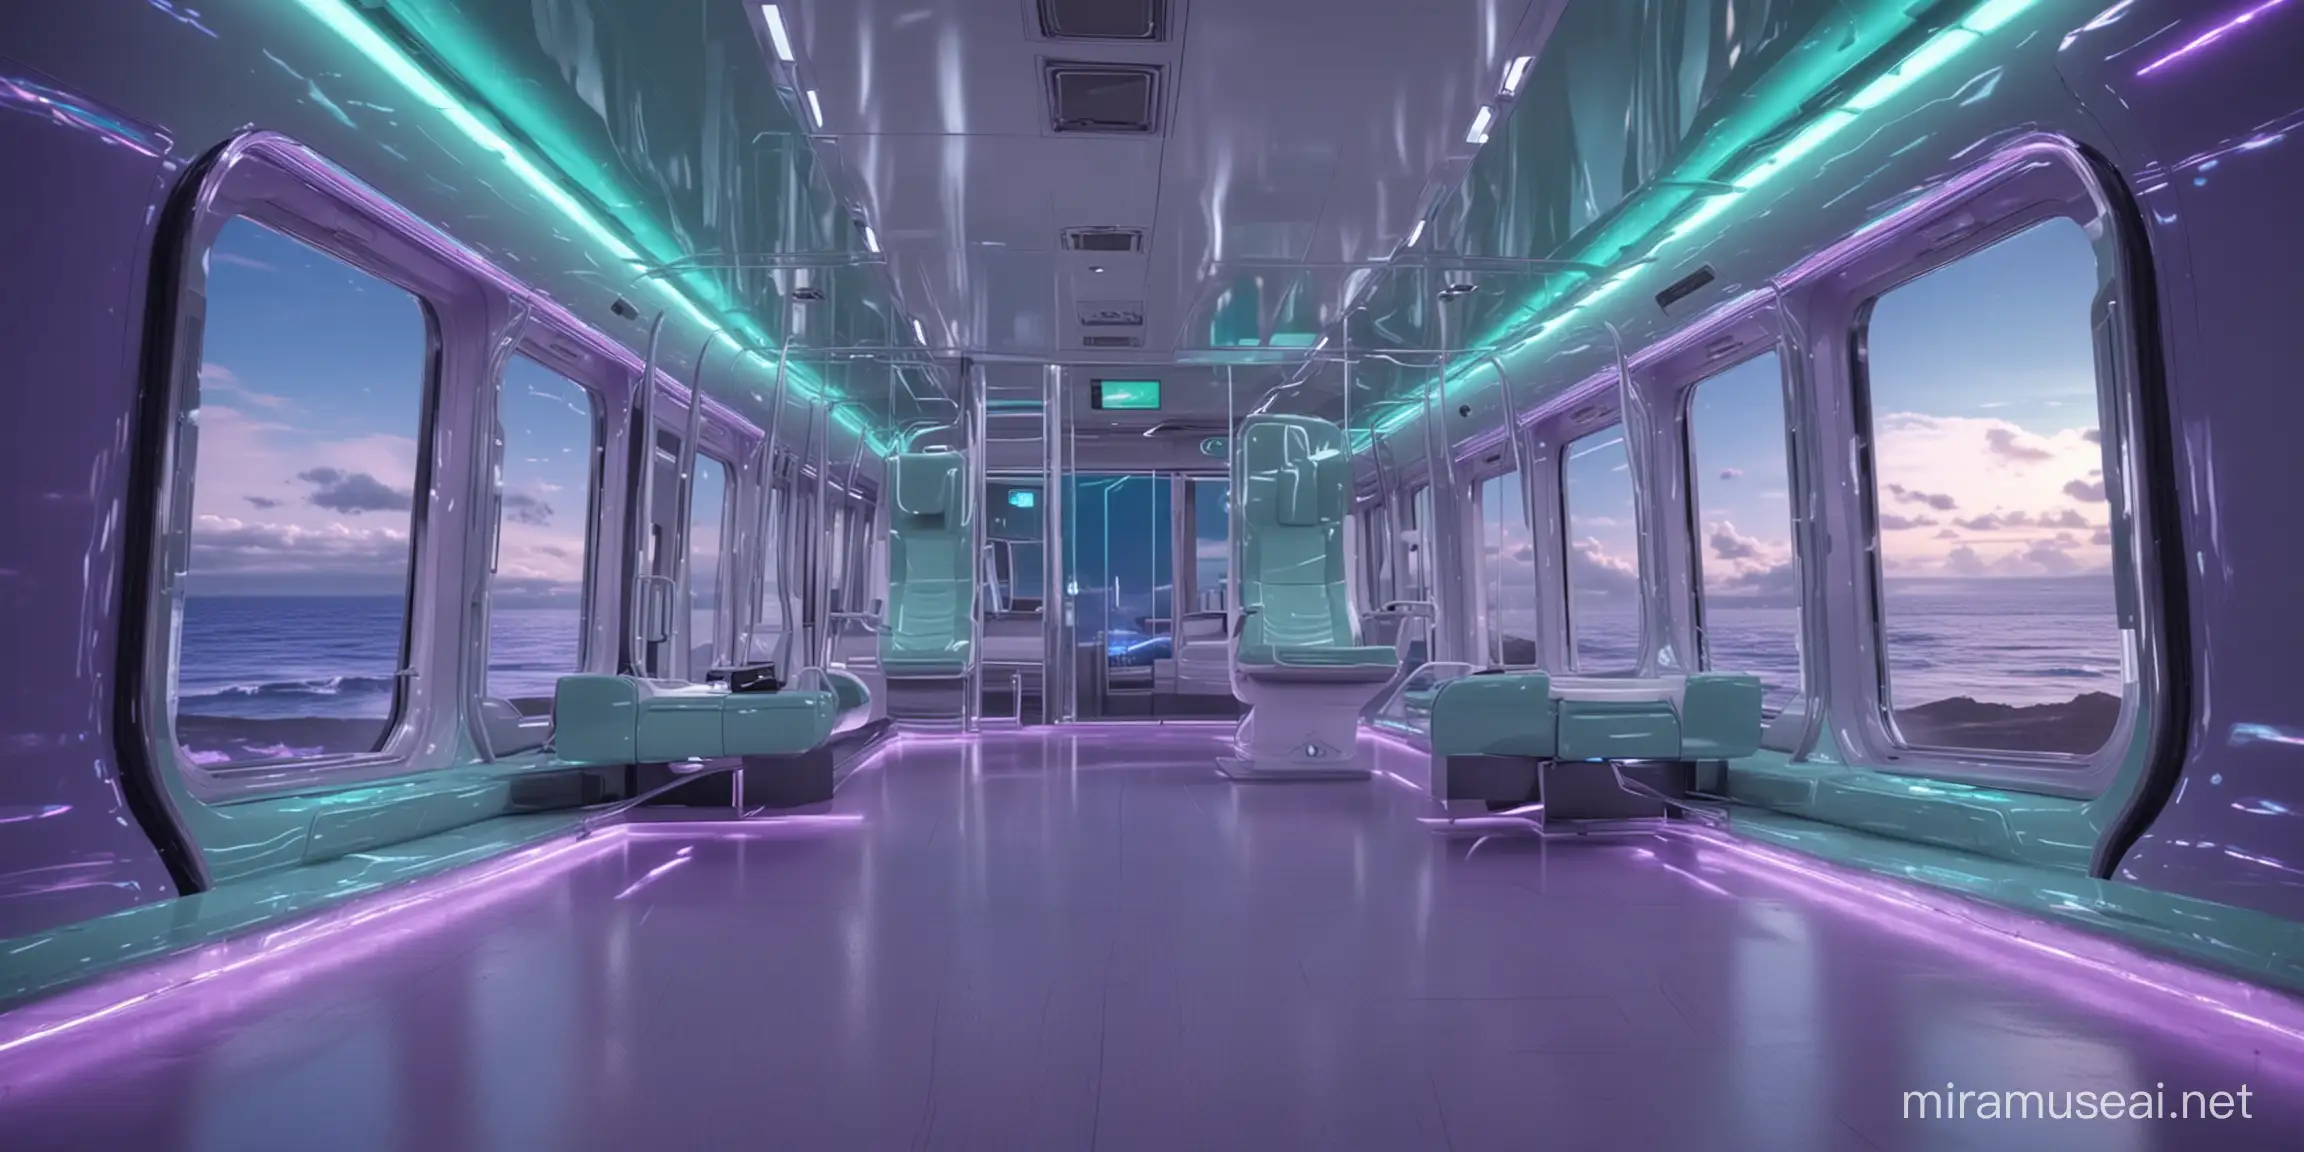 Futuristic HighClass Train Cabin with Transparent Ocean Floor